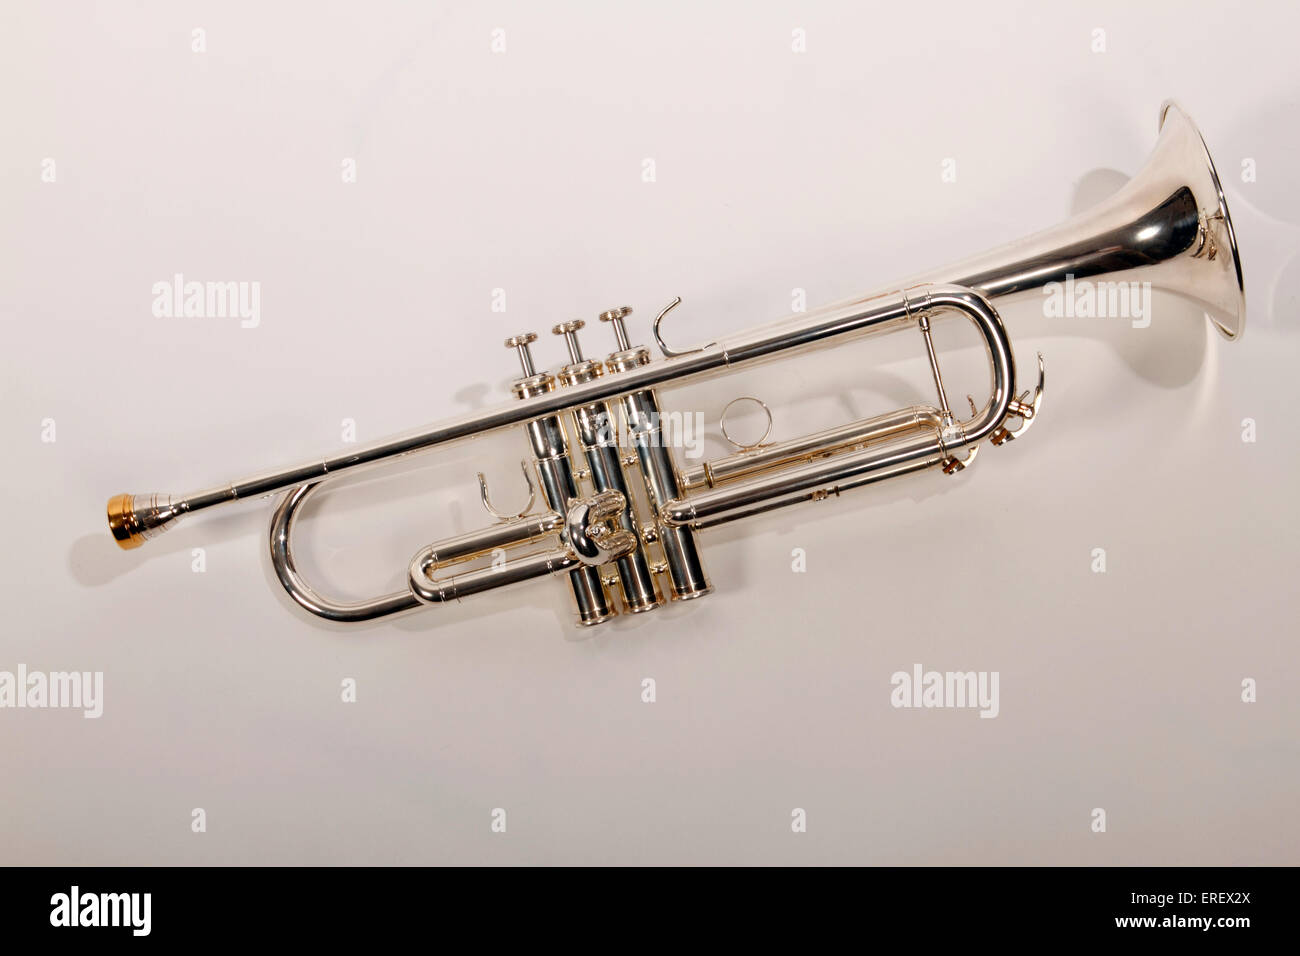 Generic - Yamaha trumpet Stock Photo - Alamy